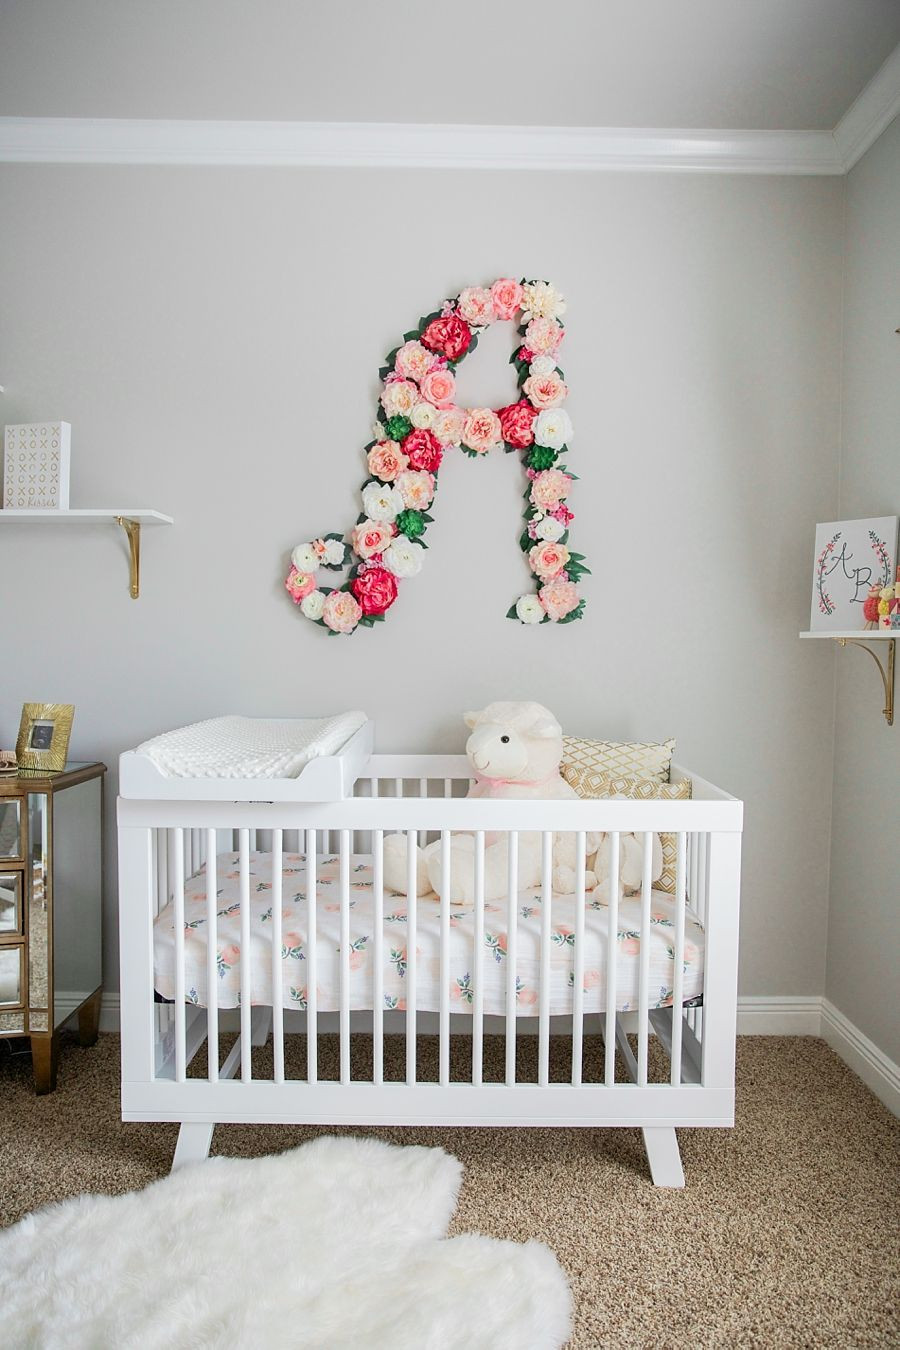 DIY Baby Room Ideas
 Baby girl nursery with floral wall